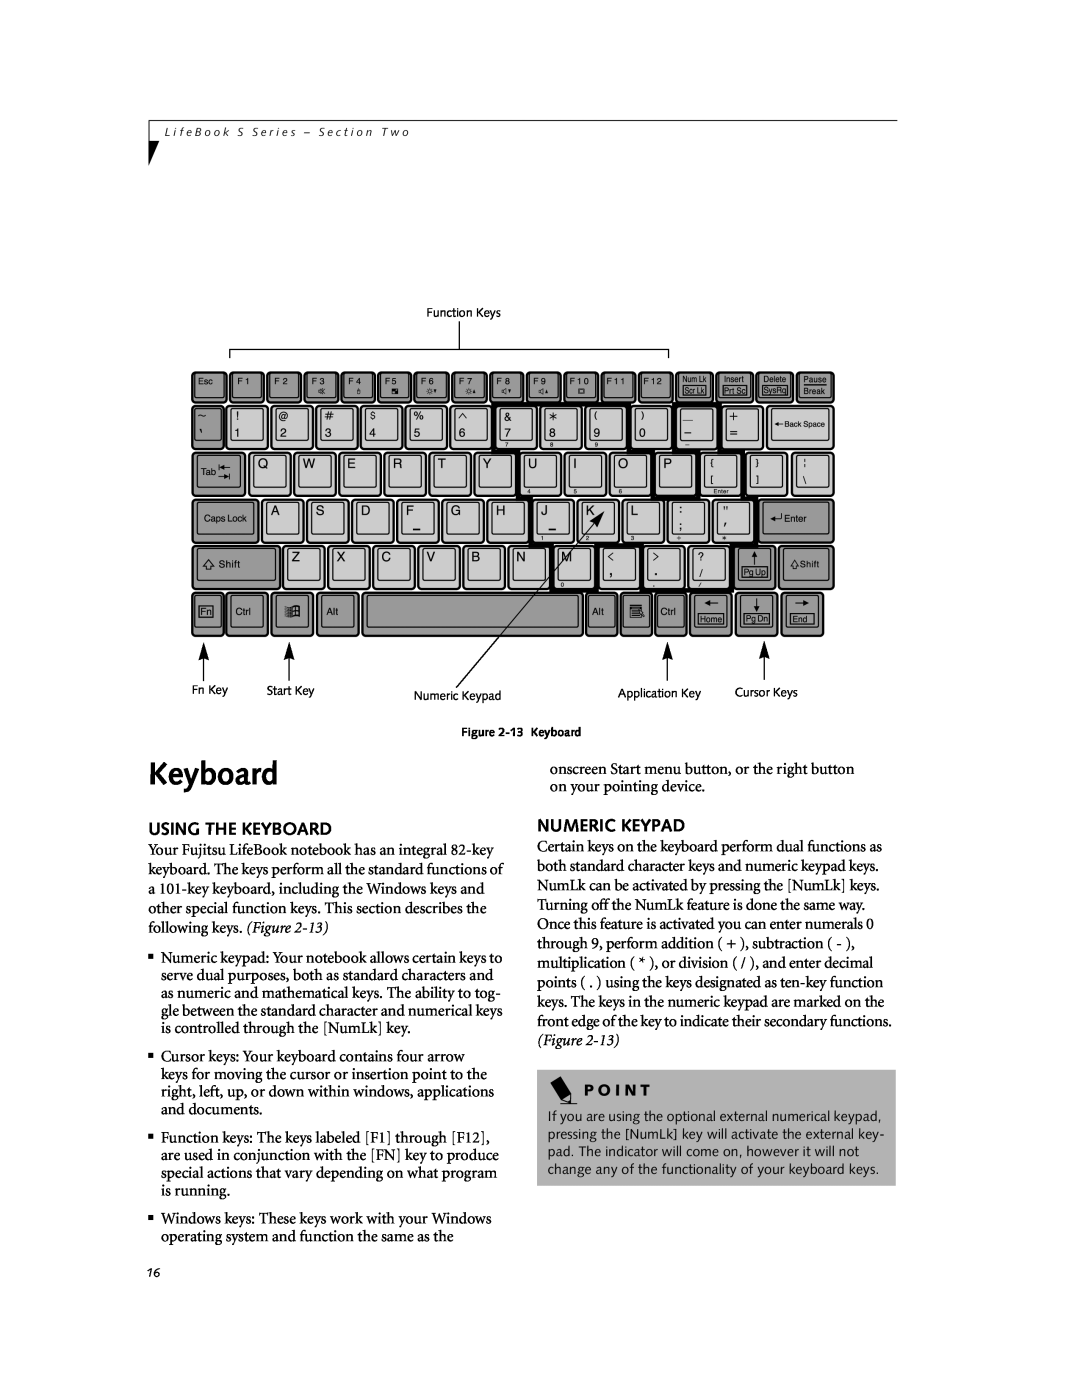 Fujitsu DVD Player manual Using The Keyboard, Numeric Keypad, P O I N T 